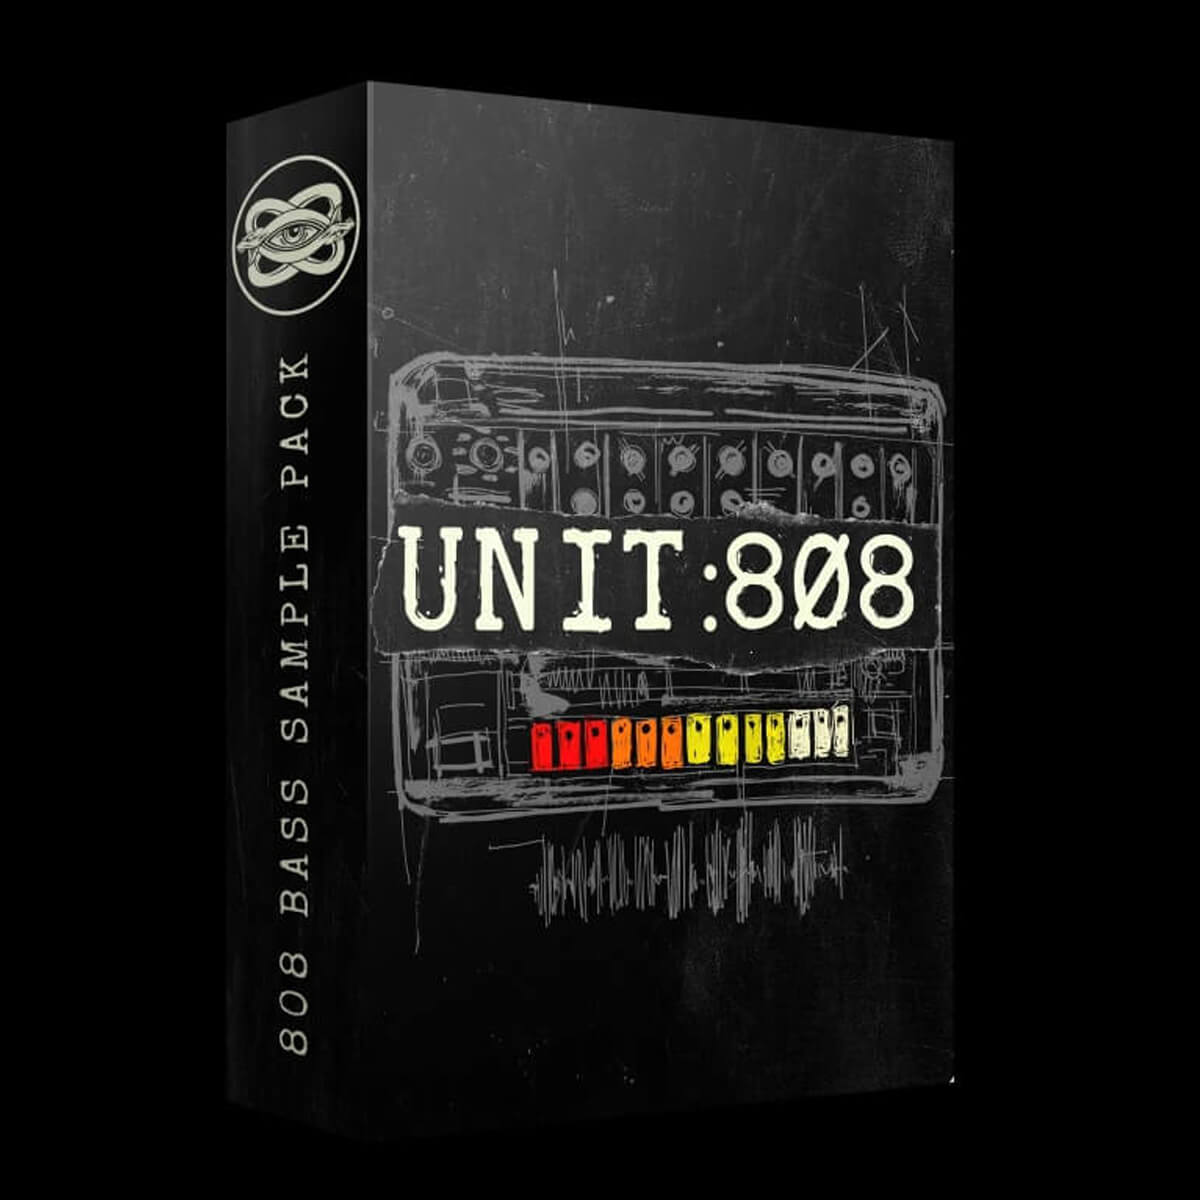 'UNIT: 808' - 808 Sample Pack